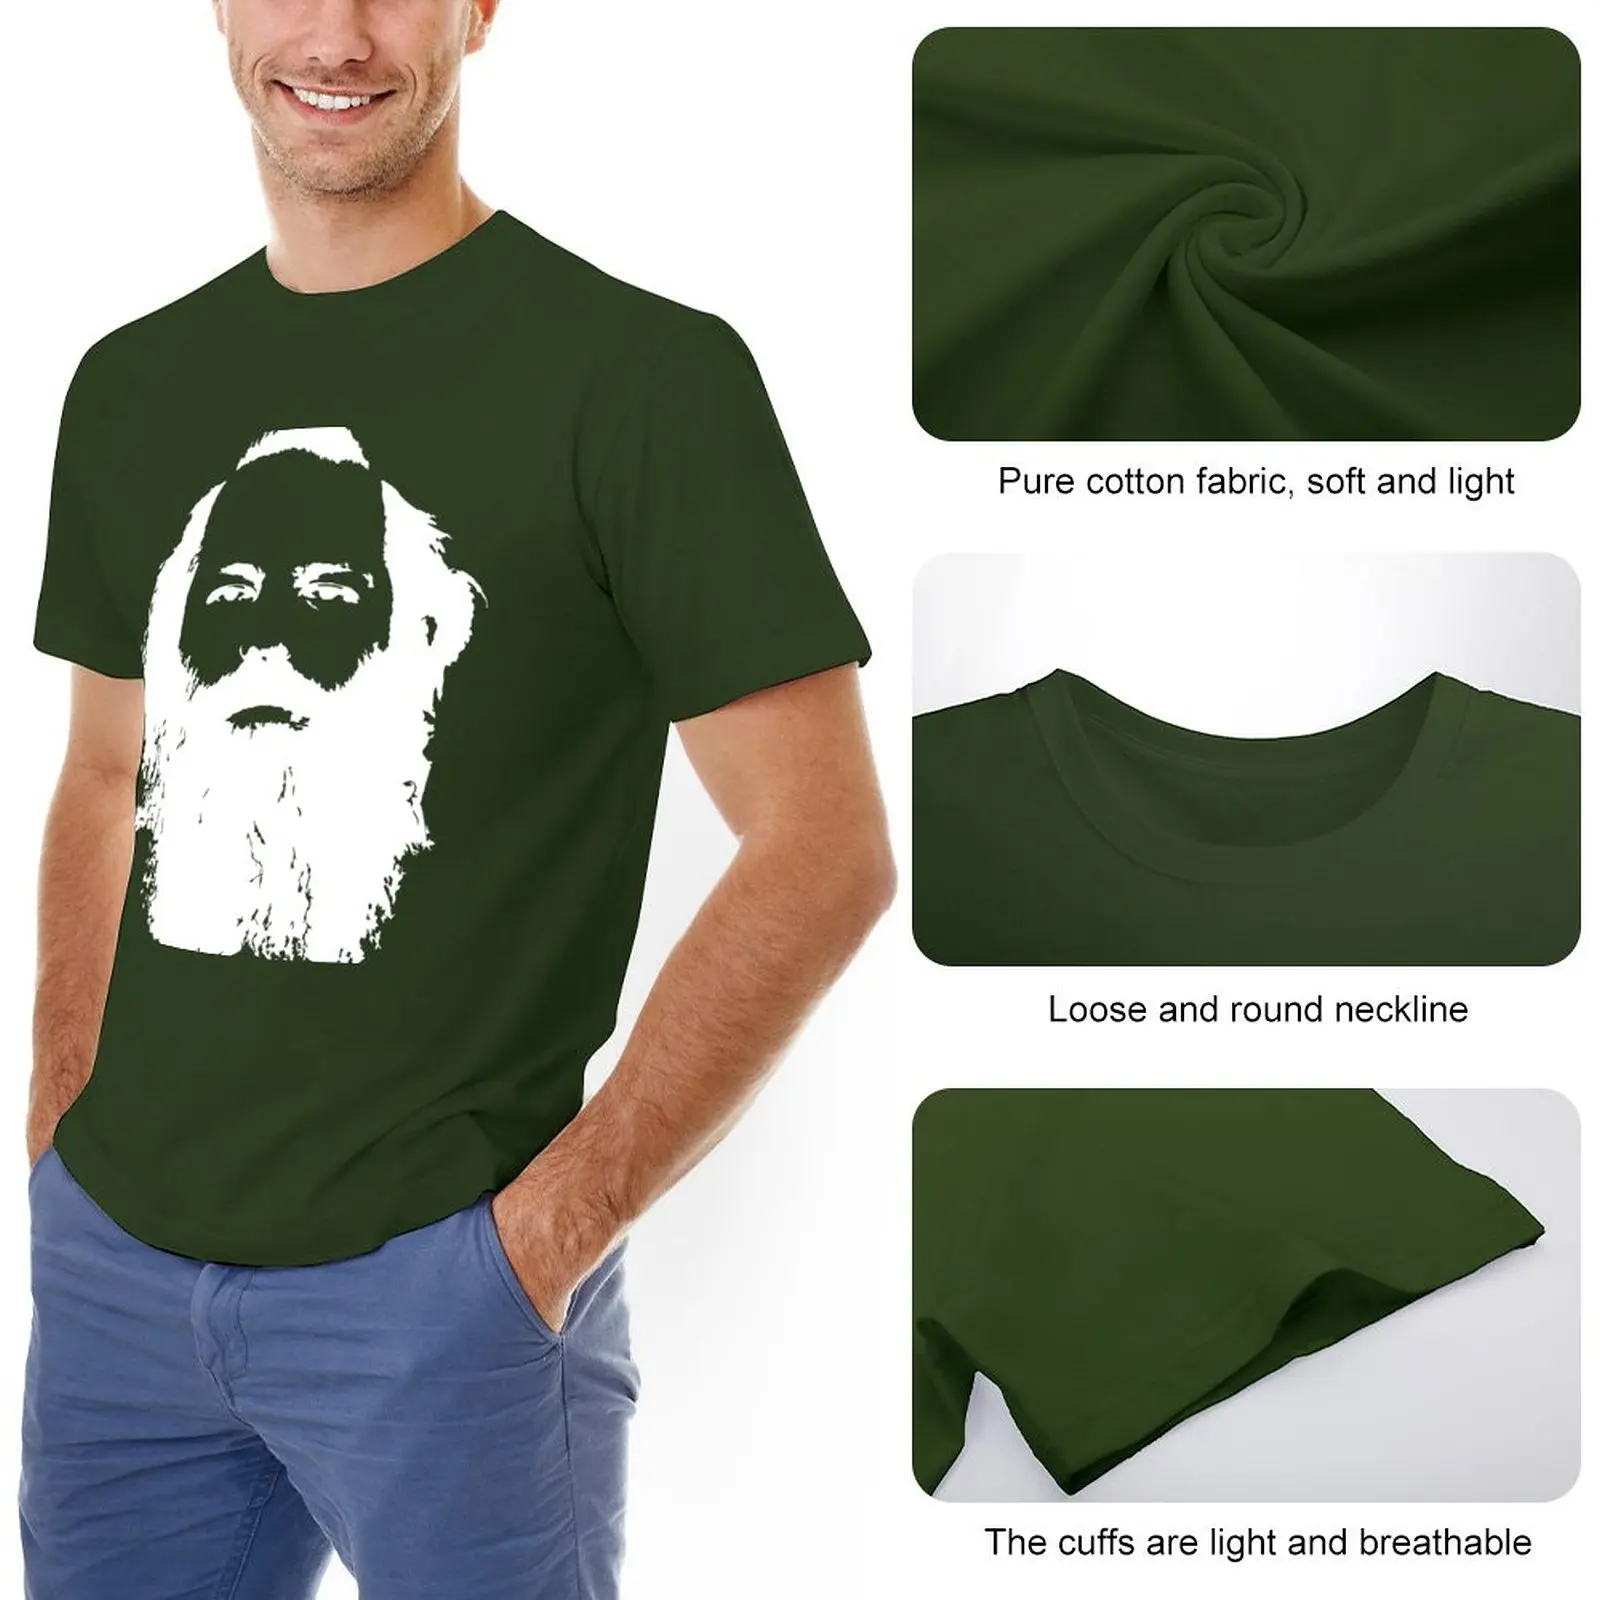 Rick Rubin crew neck T-shirt